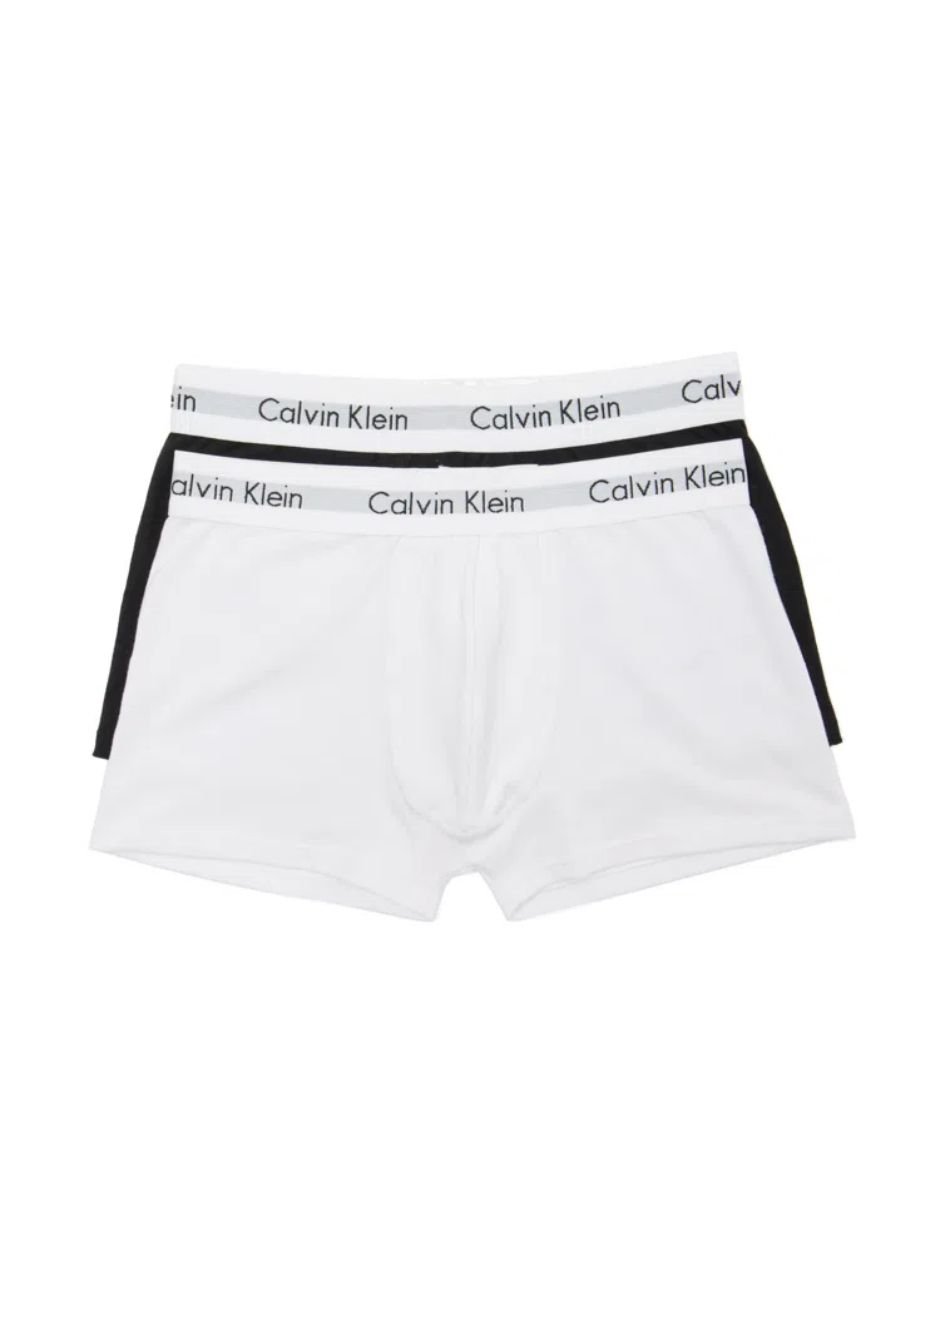 Kit 3 Cuecas Calvin Klein Branca/Preta/Cinza